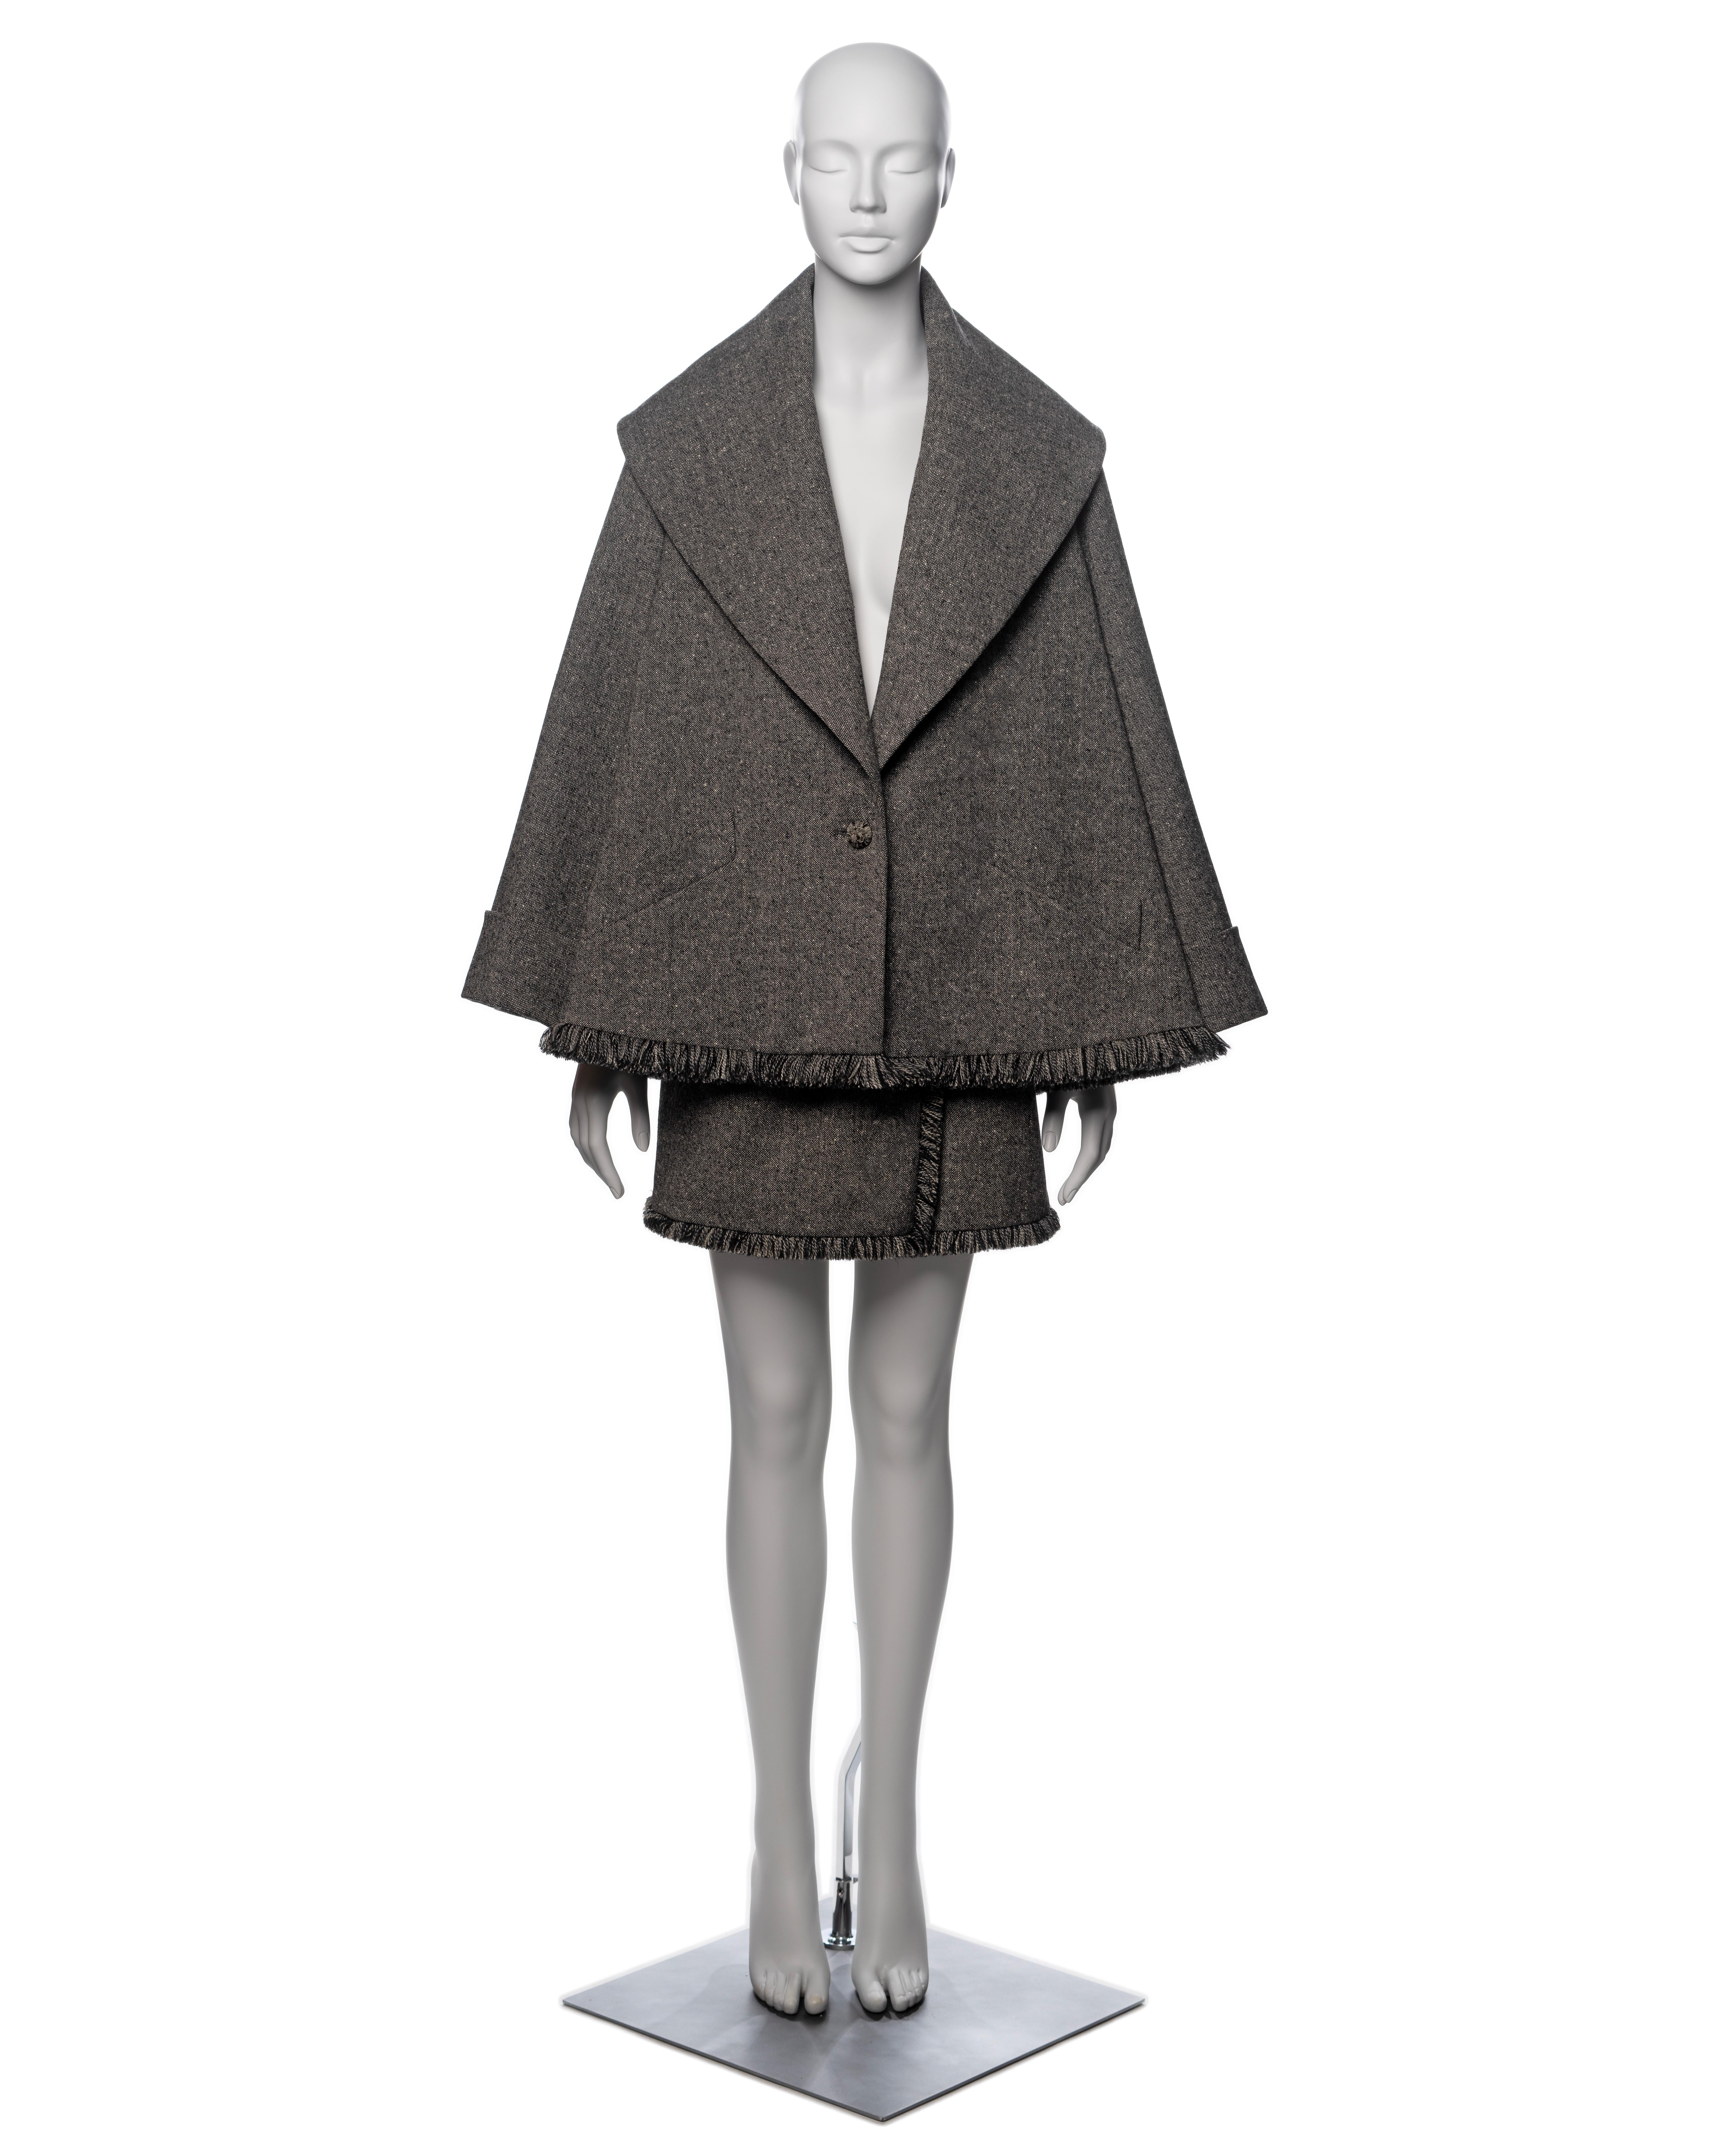 ▪ Brand: Christian Dior
▪ Creative Director: John Galliano
▪ Collection: Fall-Winter 1998
▪ Fabric: Grey Wool Tweed, Cream Silk Lining
▪ Details: Extra large shawl lapel, fringe trim
▪ Size: Jacket; FR36 - UK8 - US4 / Skirt; FR38 - UK10 - US6
▪ Made